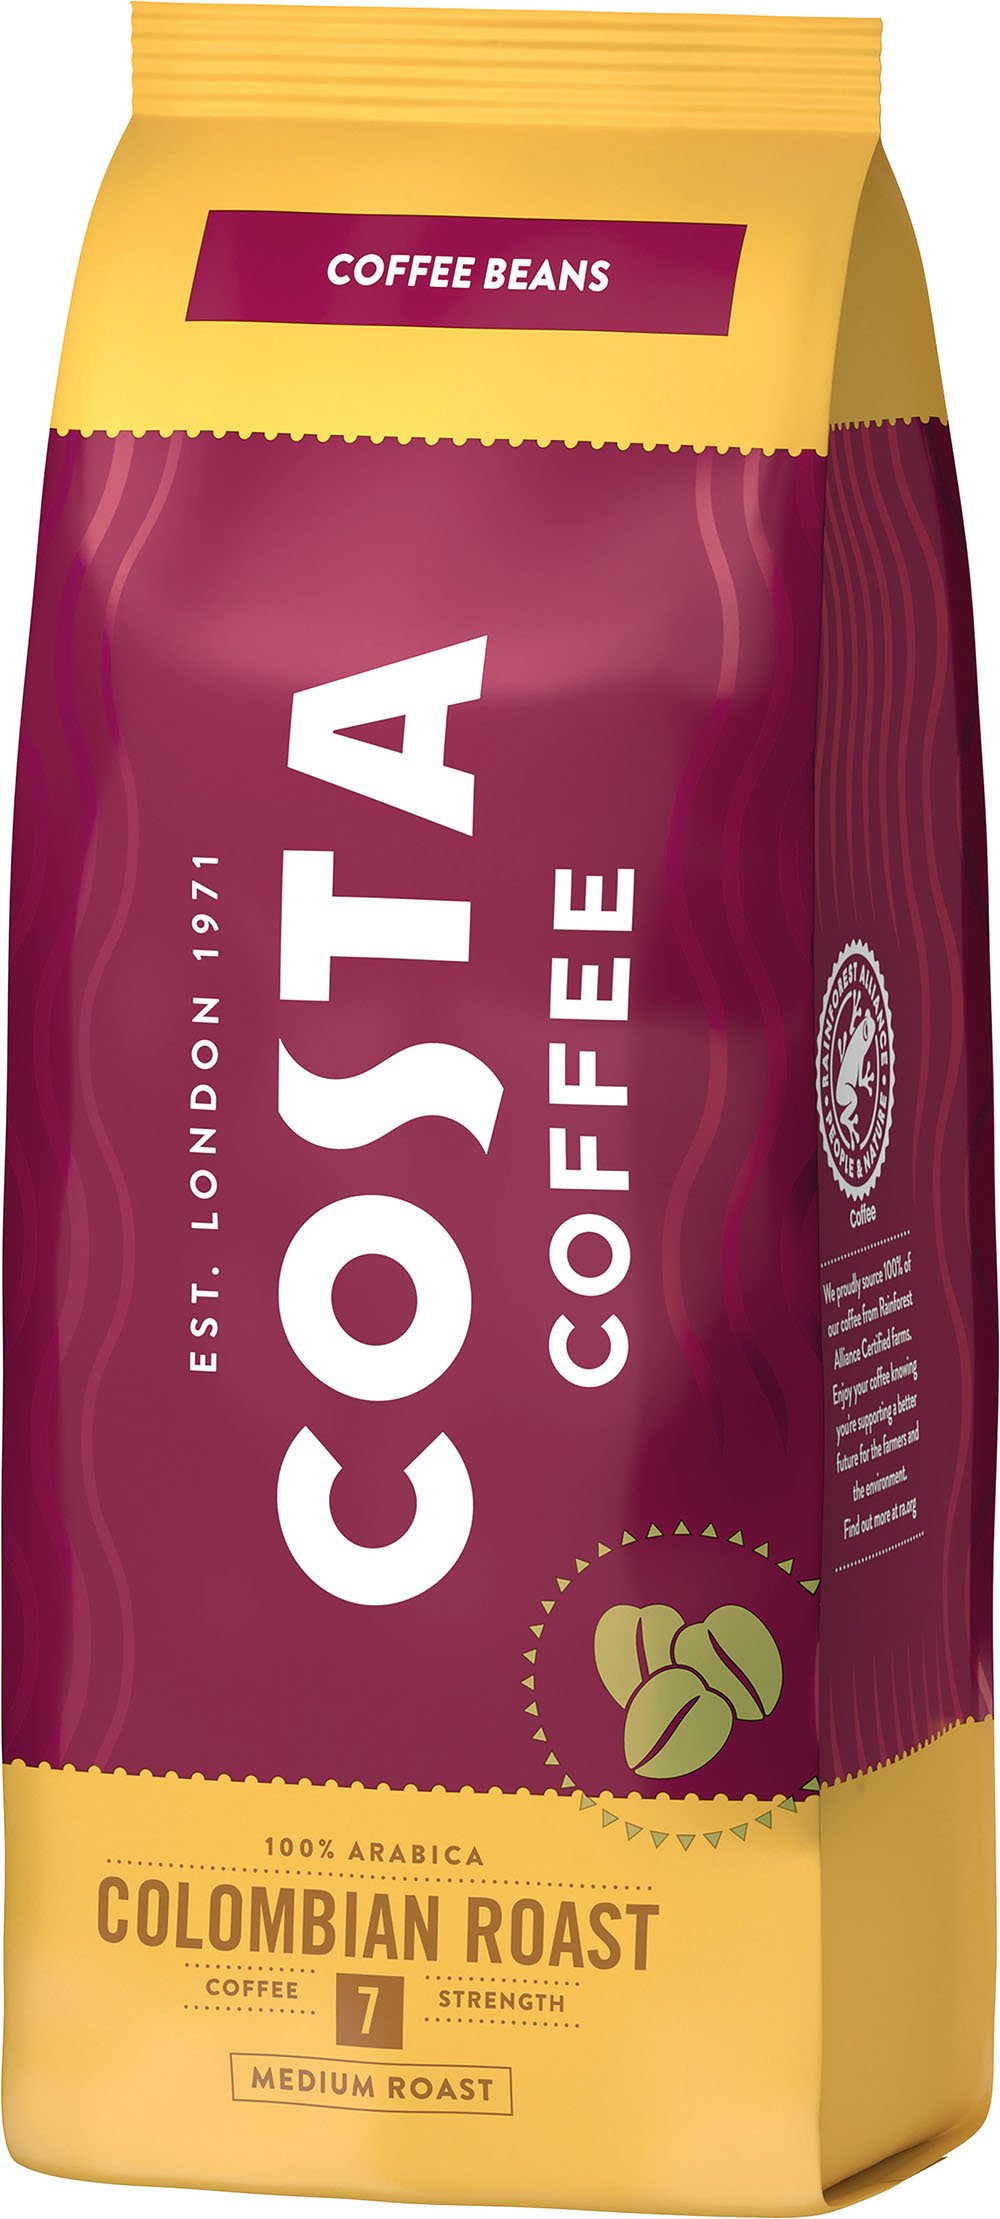 500g_COSTA COFFEE_ziarnista_BAG_COLOMBIAN ROAST_DYNAMIC copy